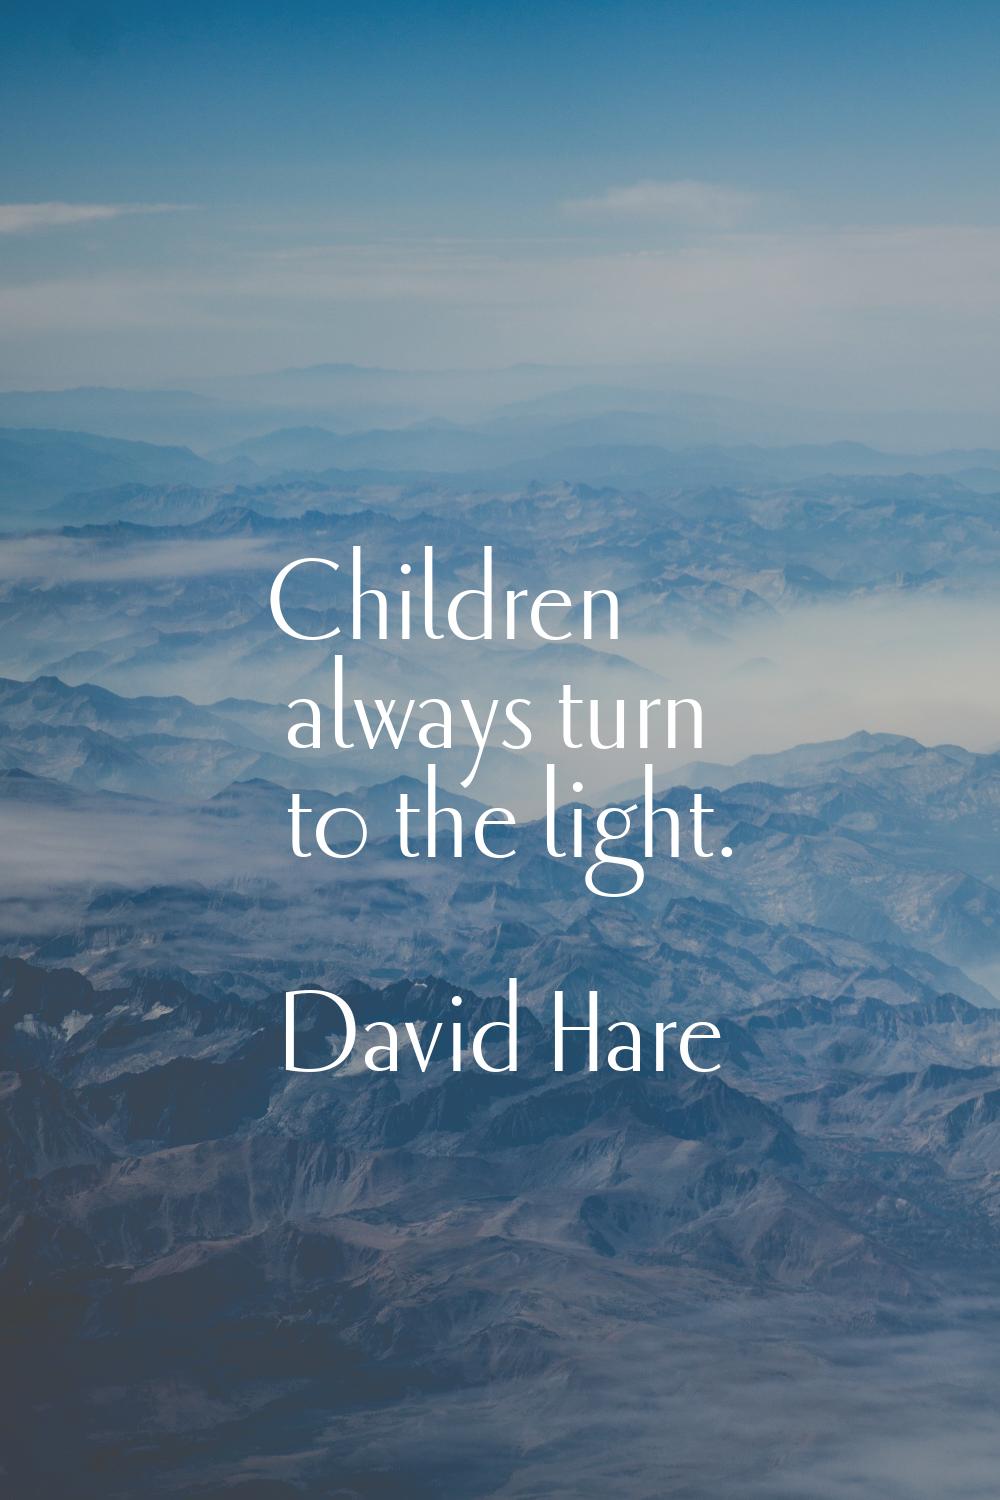 Children always turn to the light.